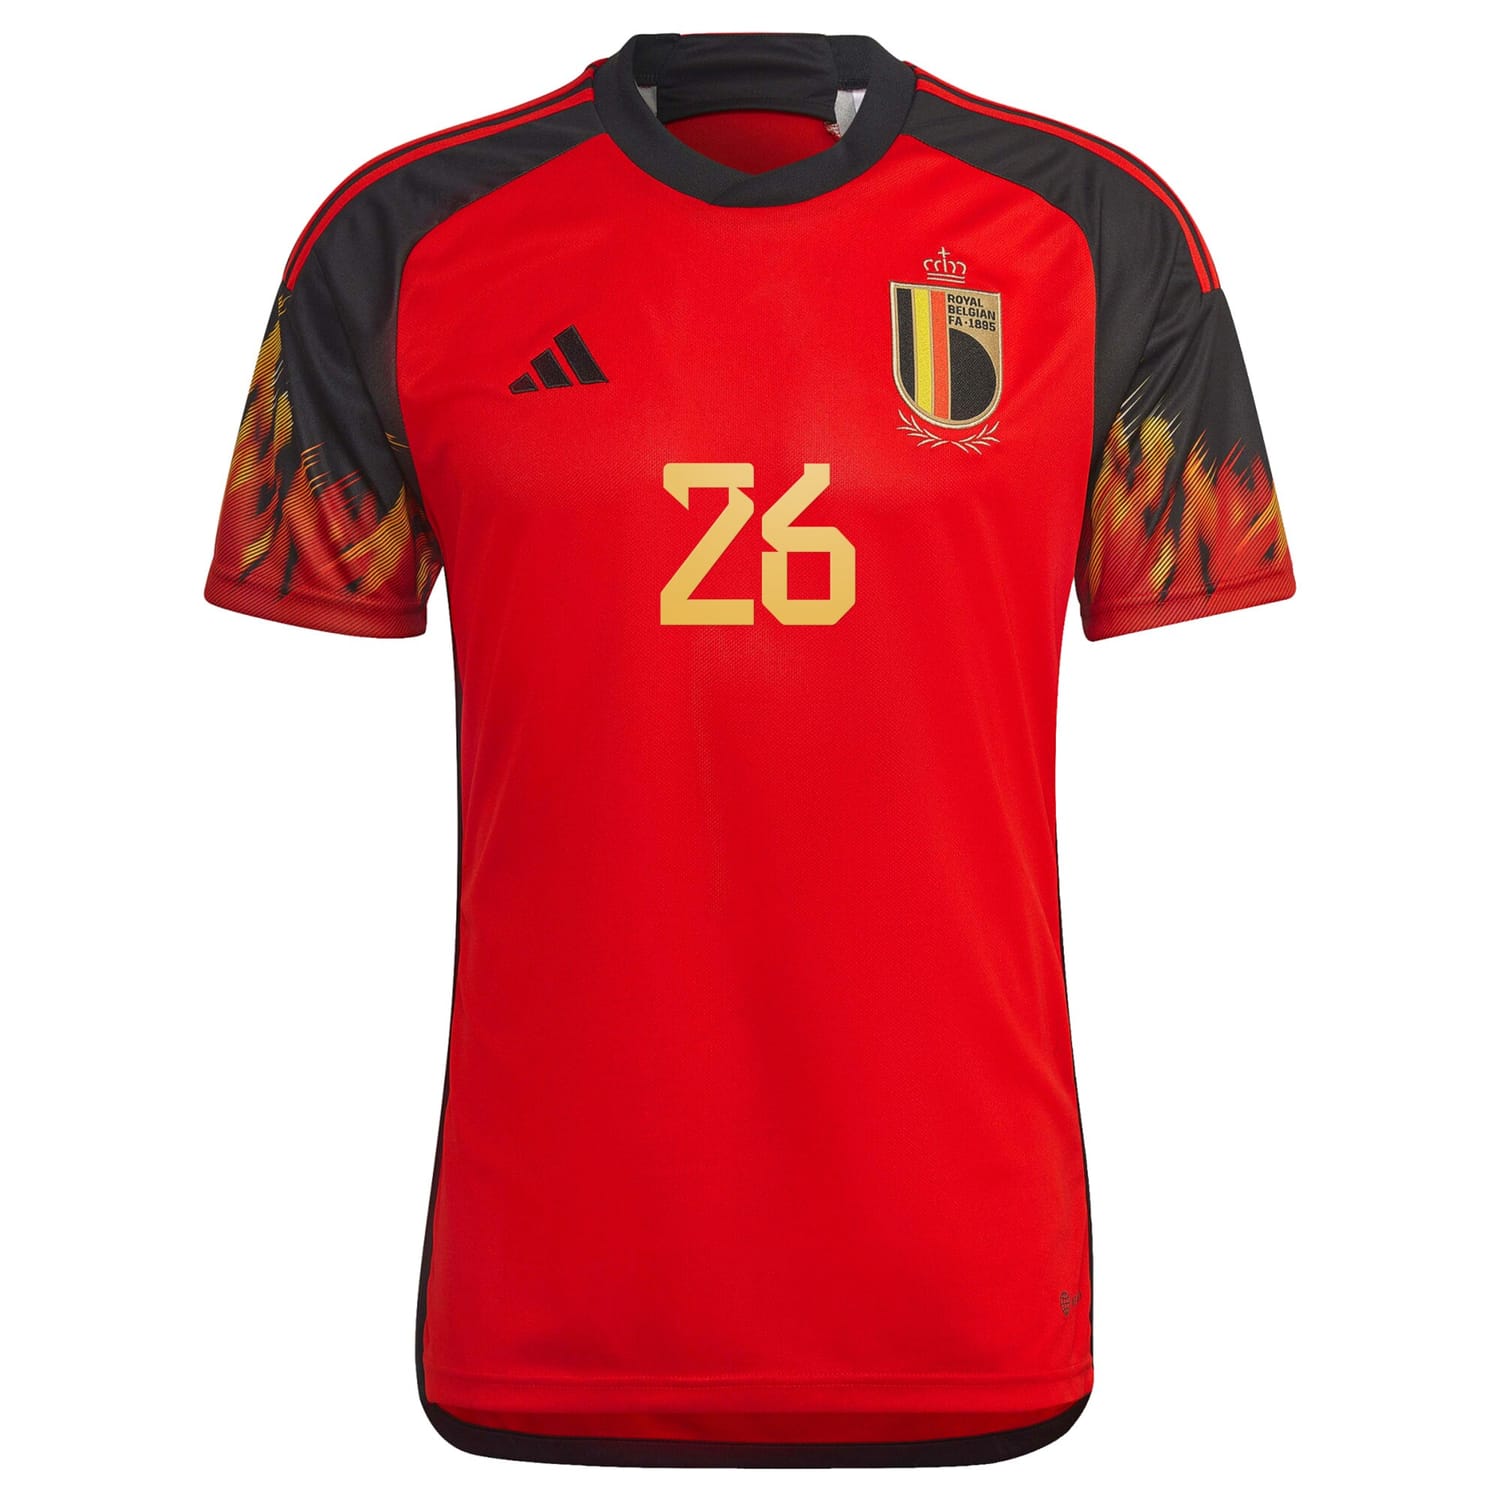 Belgium National Team Home Jersey Shirt 2022 player Zeno Debast 26 printing for Men